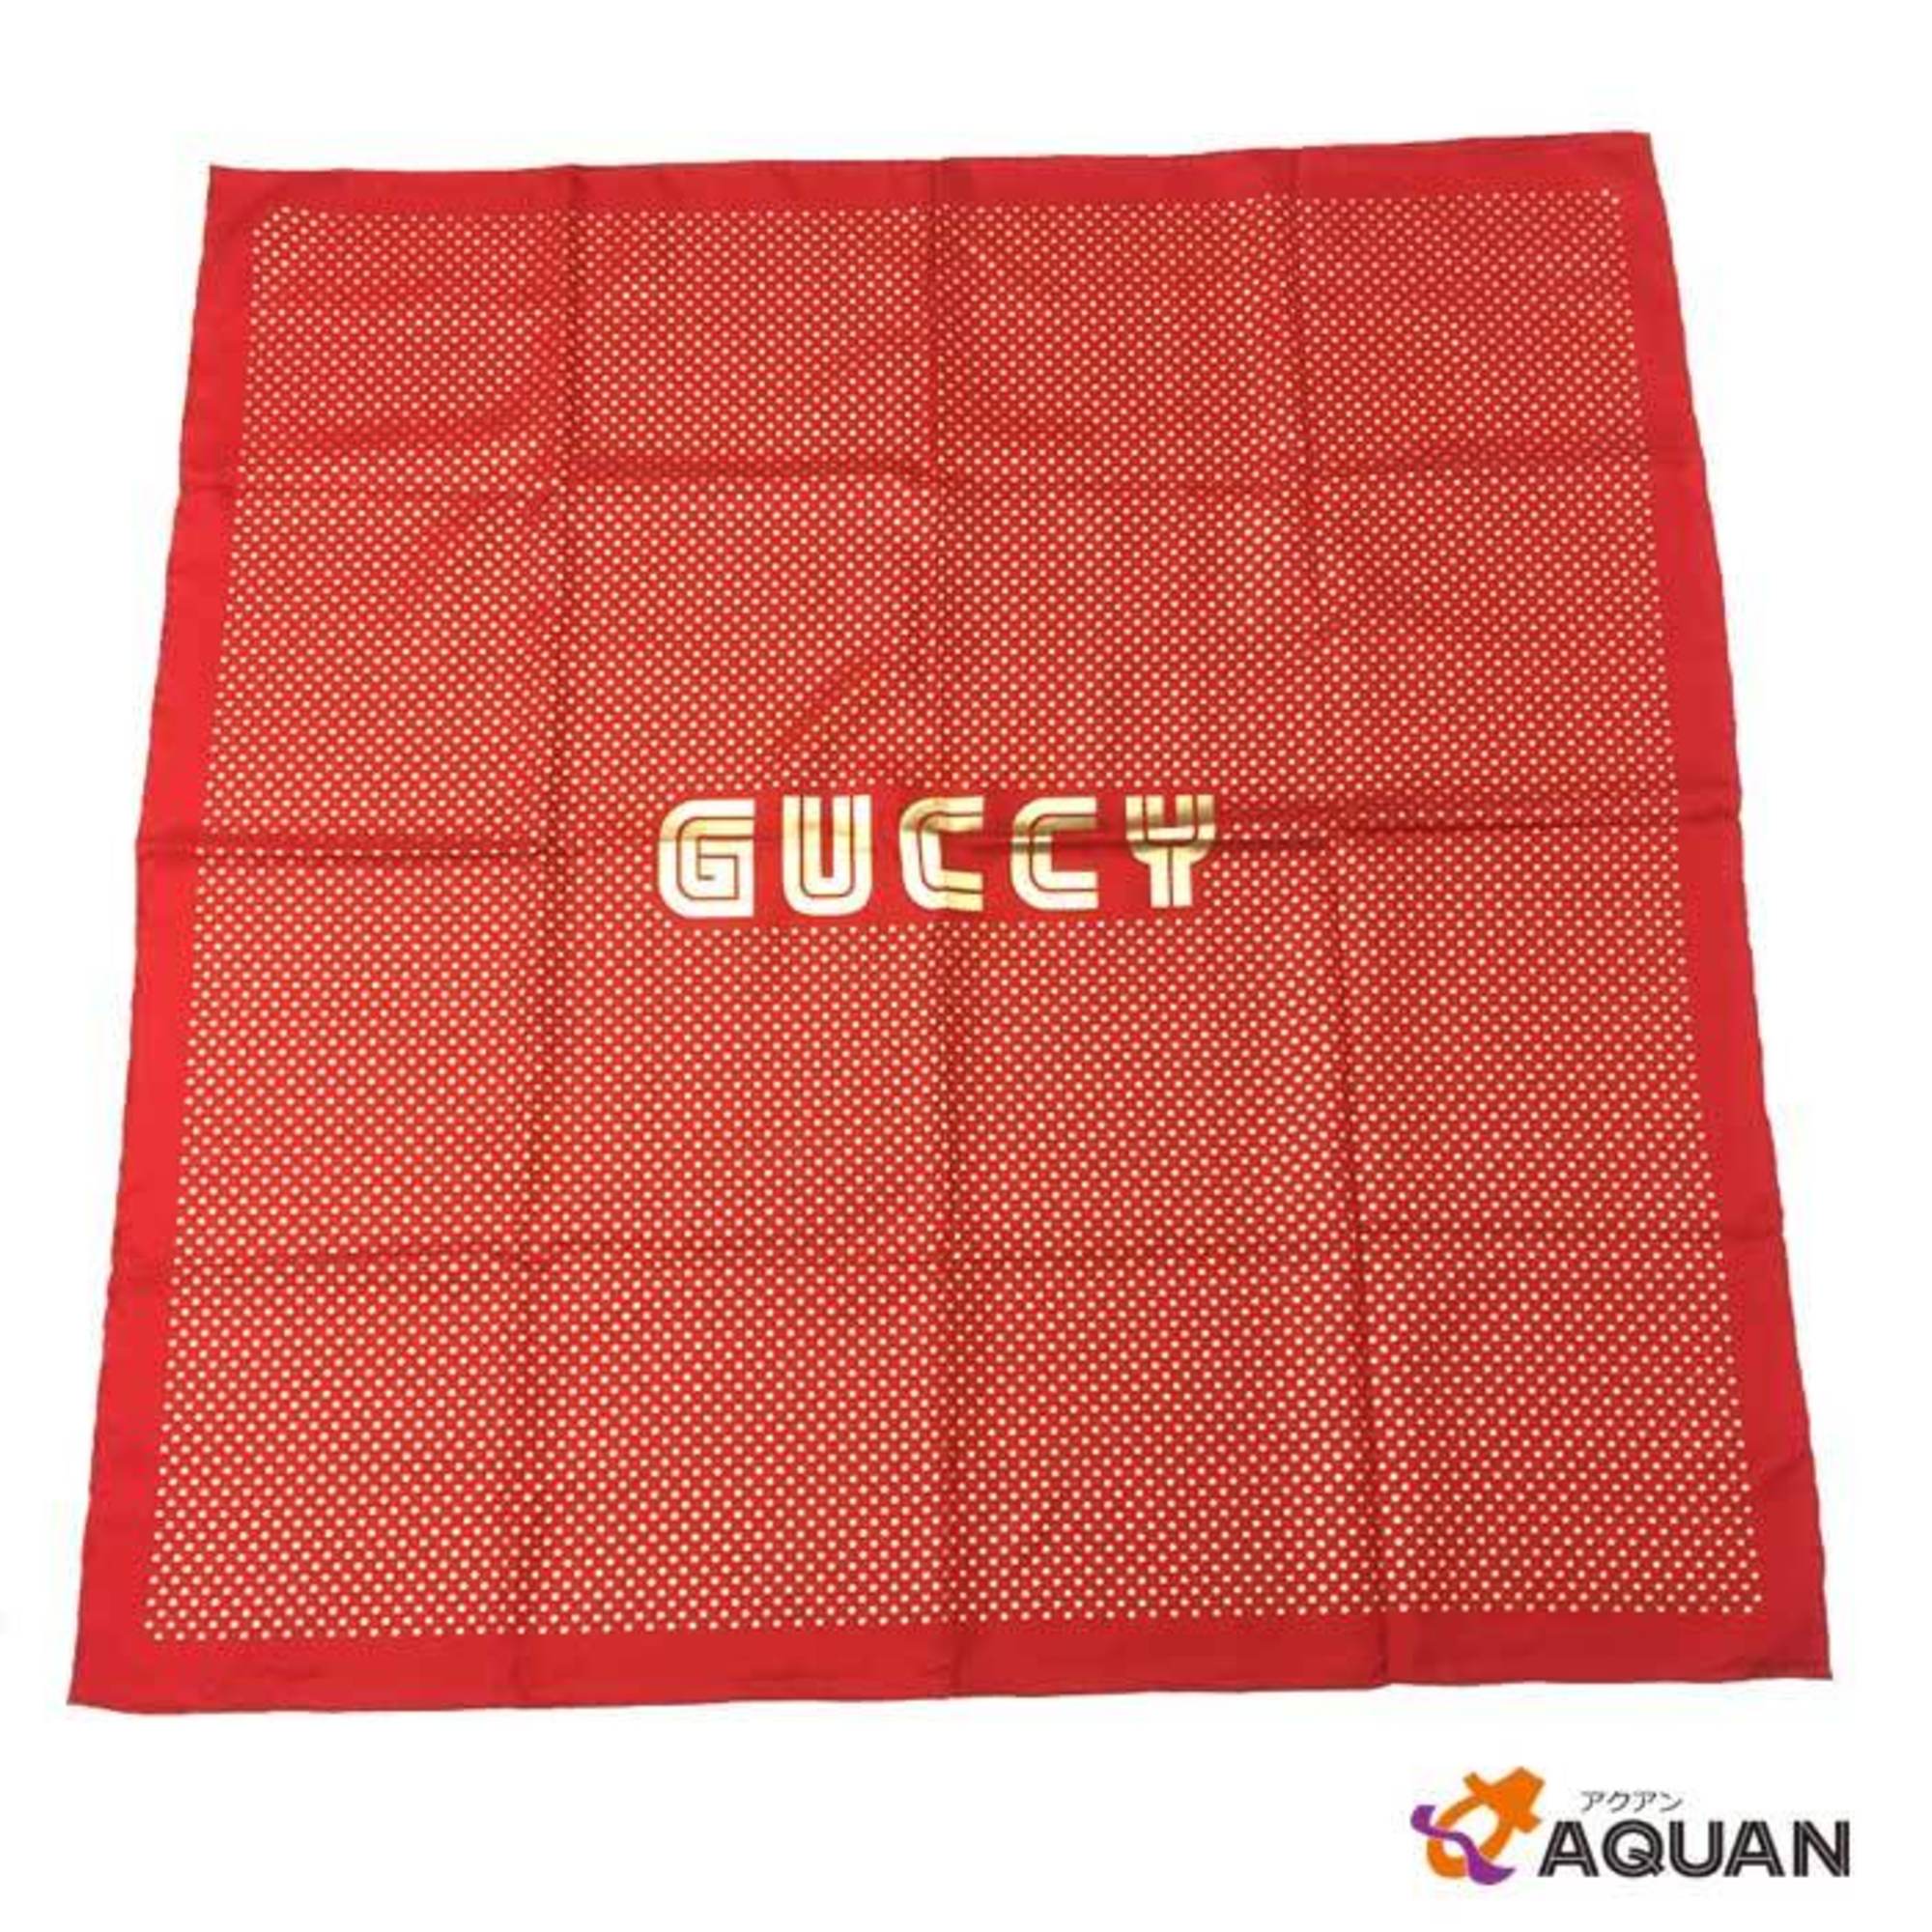 Super SALE GUCCI SEGA collaboration scarf muffler GUCCY large size 100% silk red